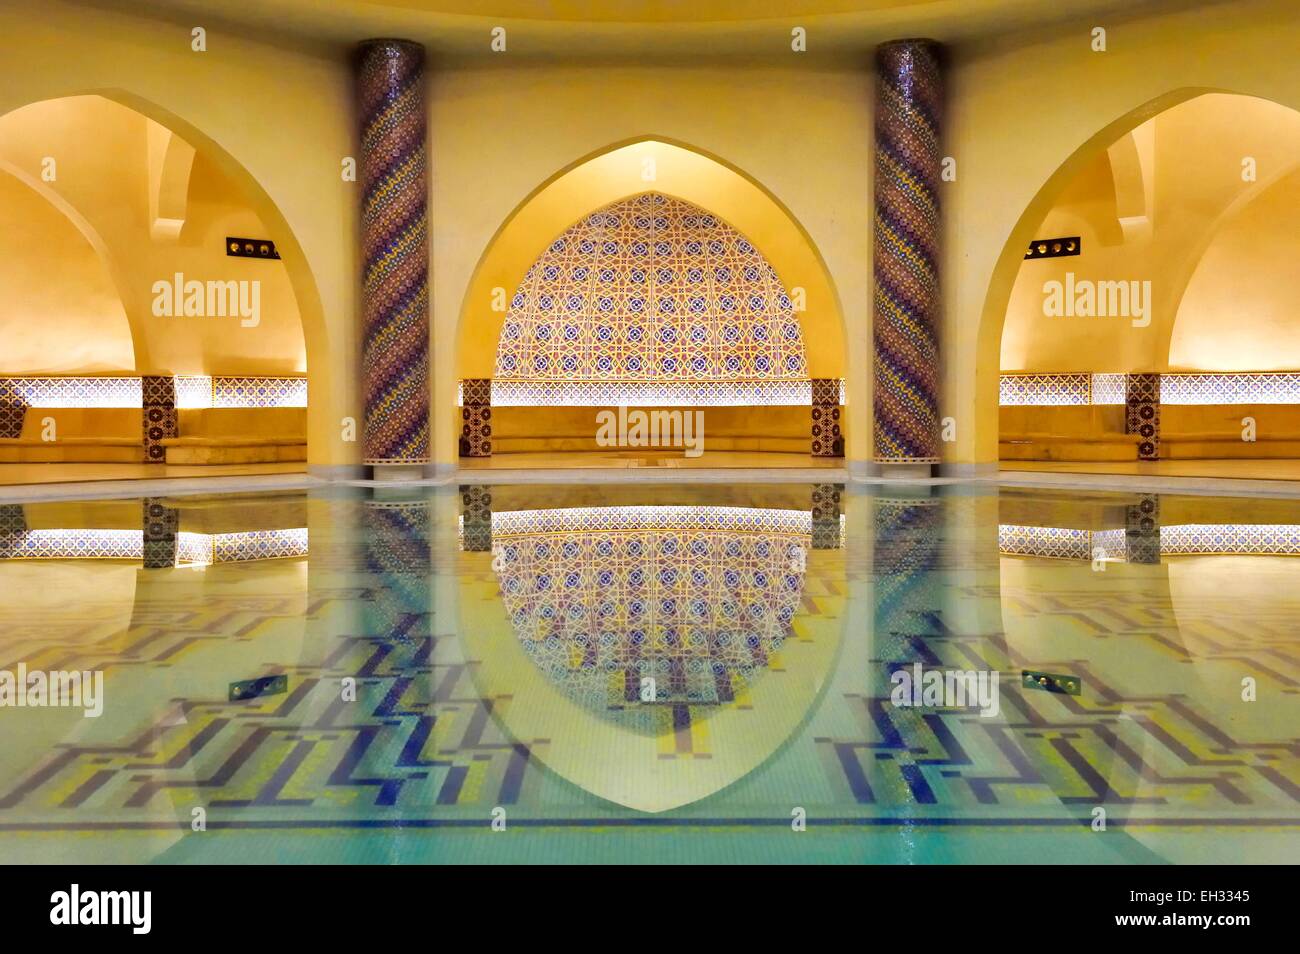 Maroc, Casablanca, Grande Mosquée Hassan II, la piscine hammam marocain Banque D'Images